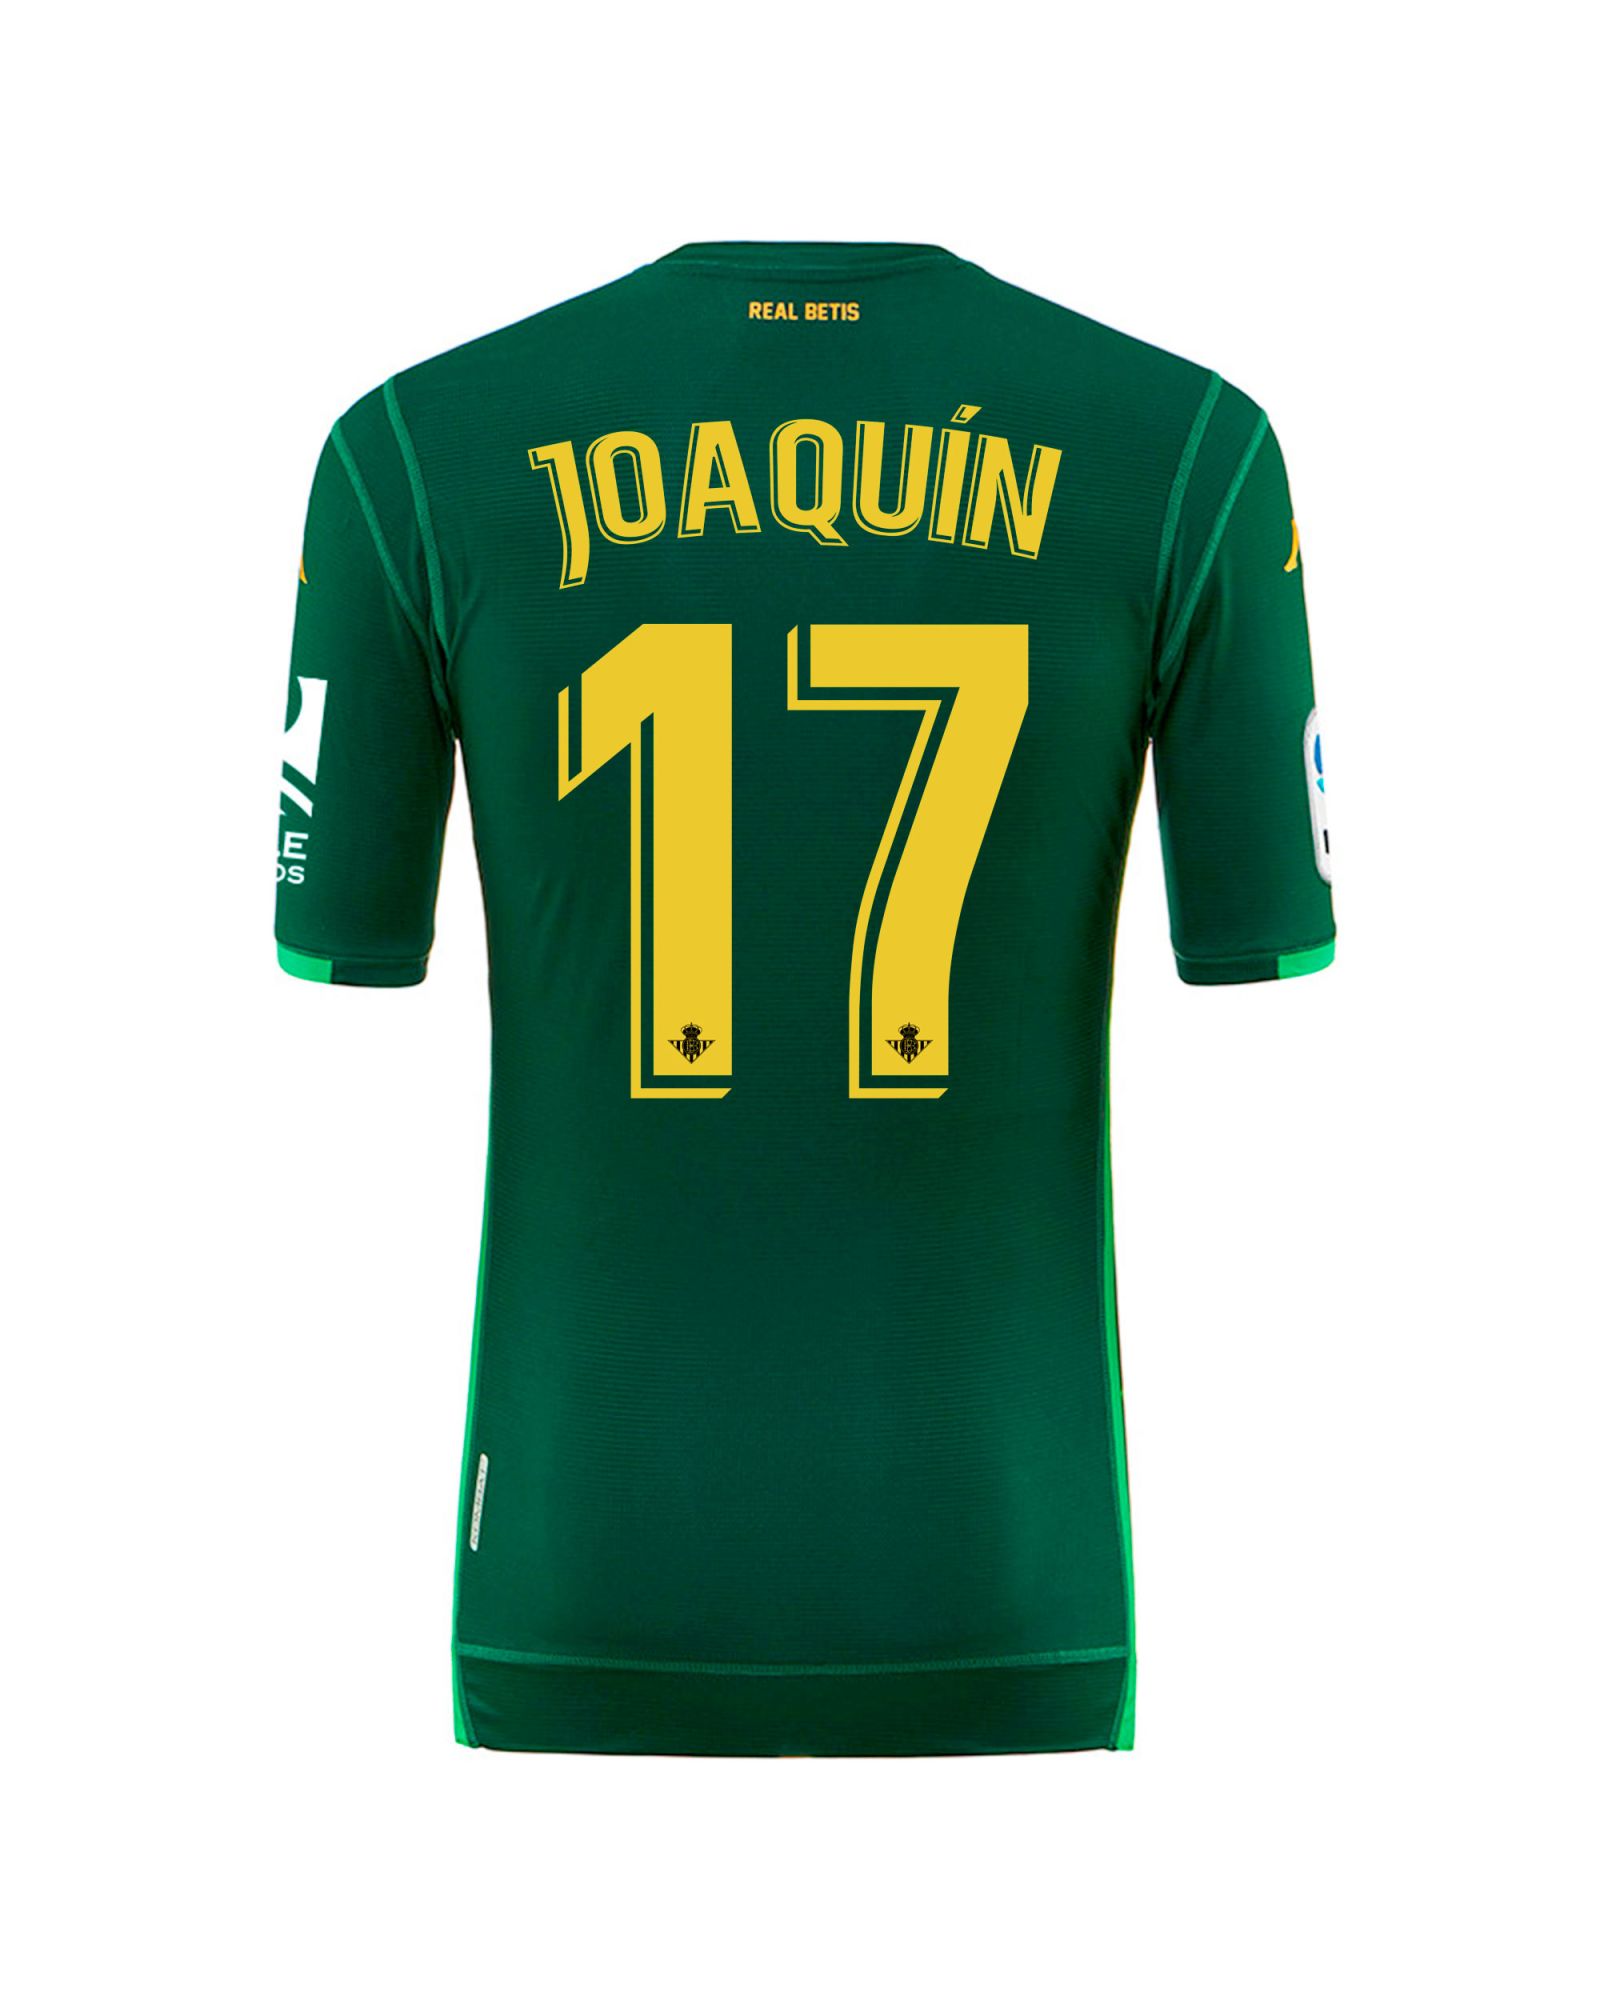 Camiseta 2ª Real Betis Balompié 2018/2019 Joaquín Verde - Fútbol Factory